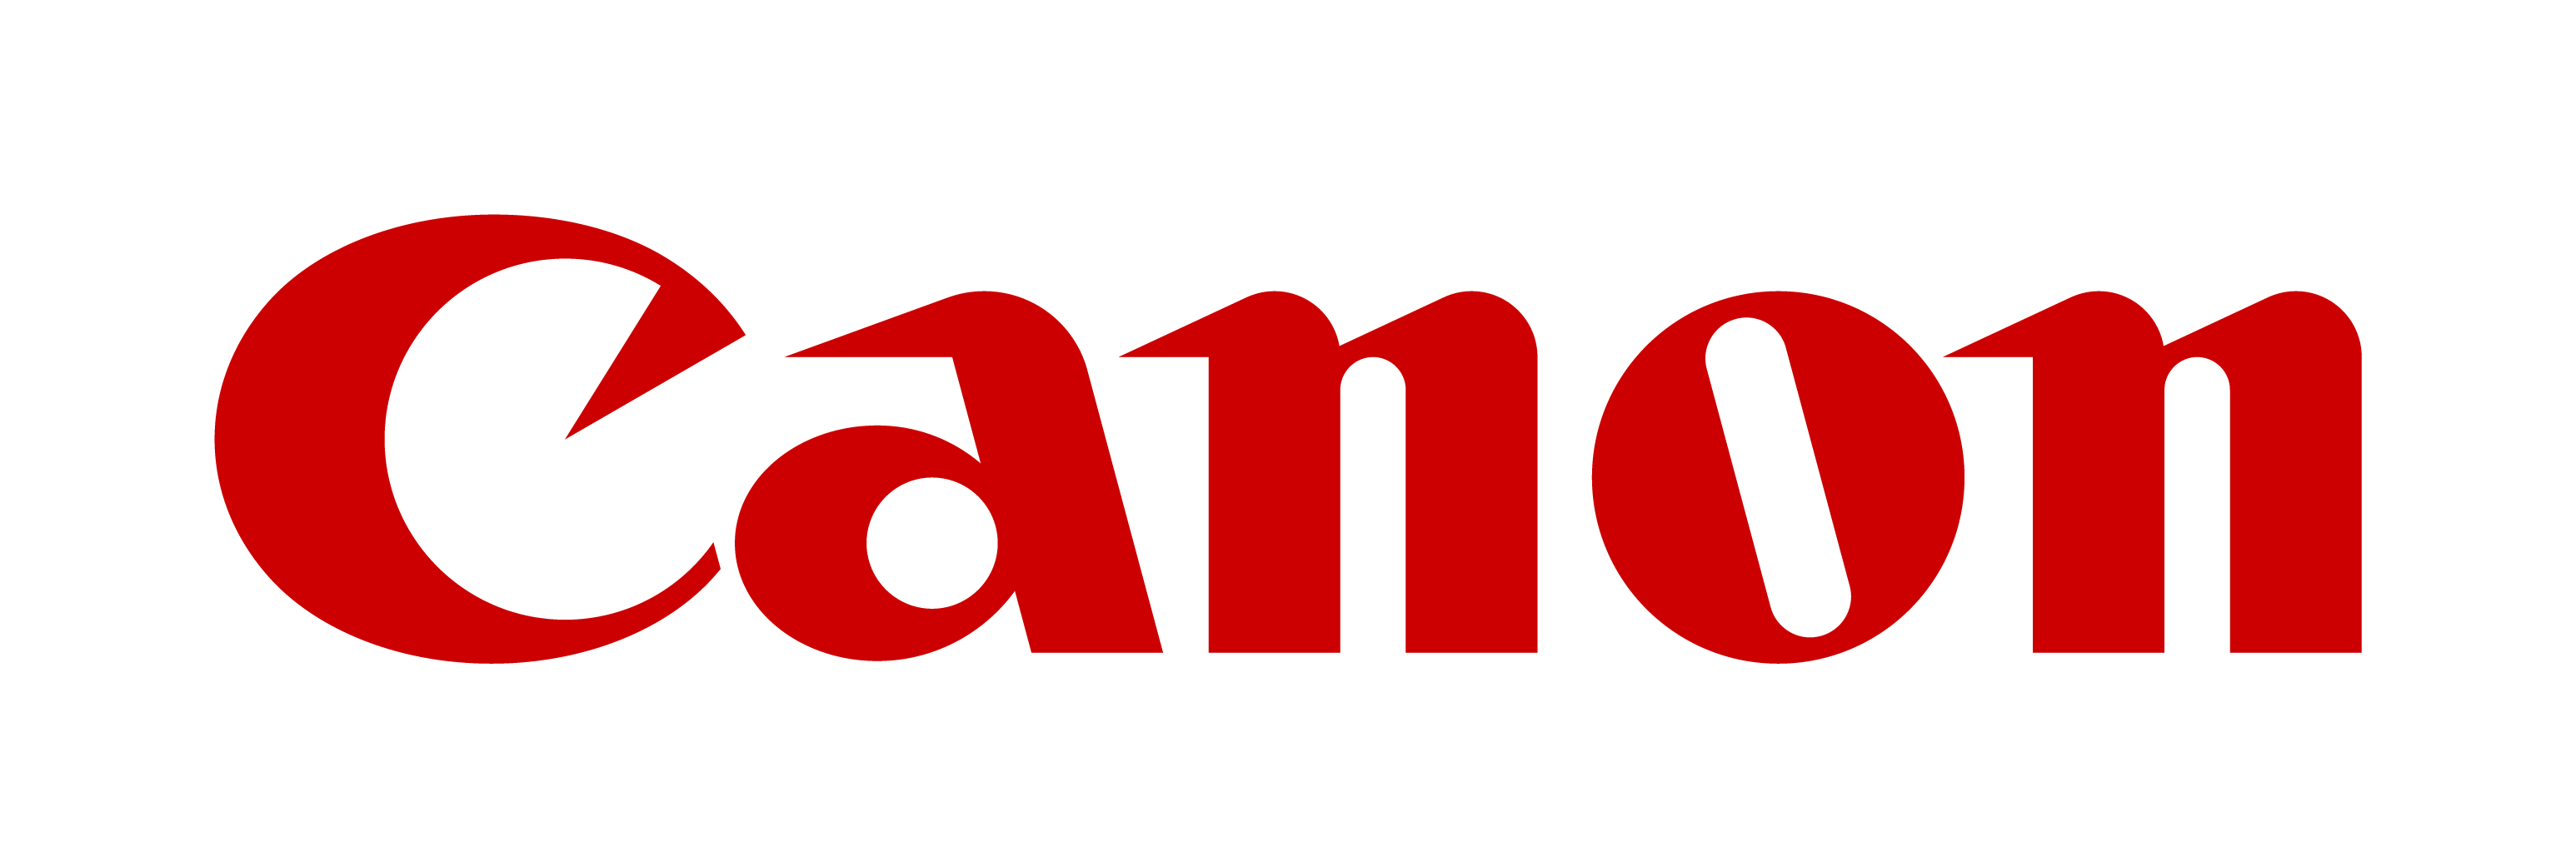 Canon Singapore Pte. Ltd. logo